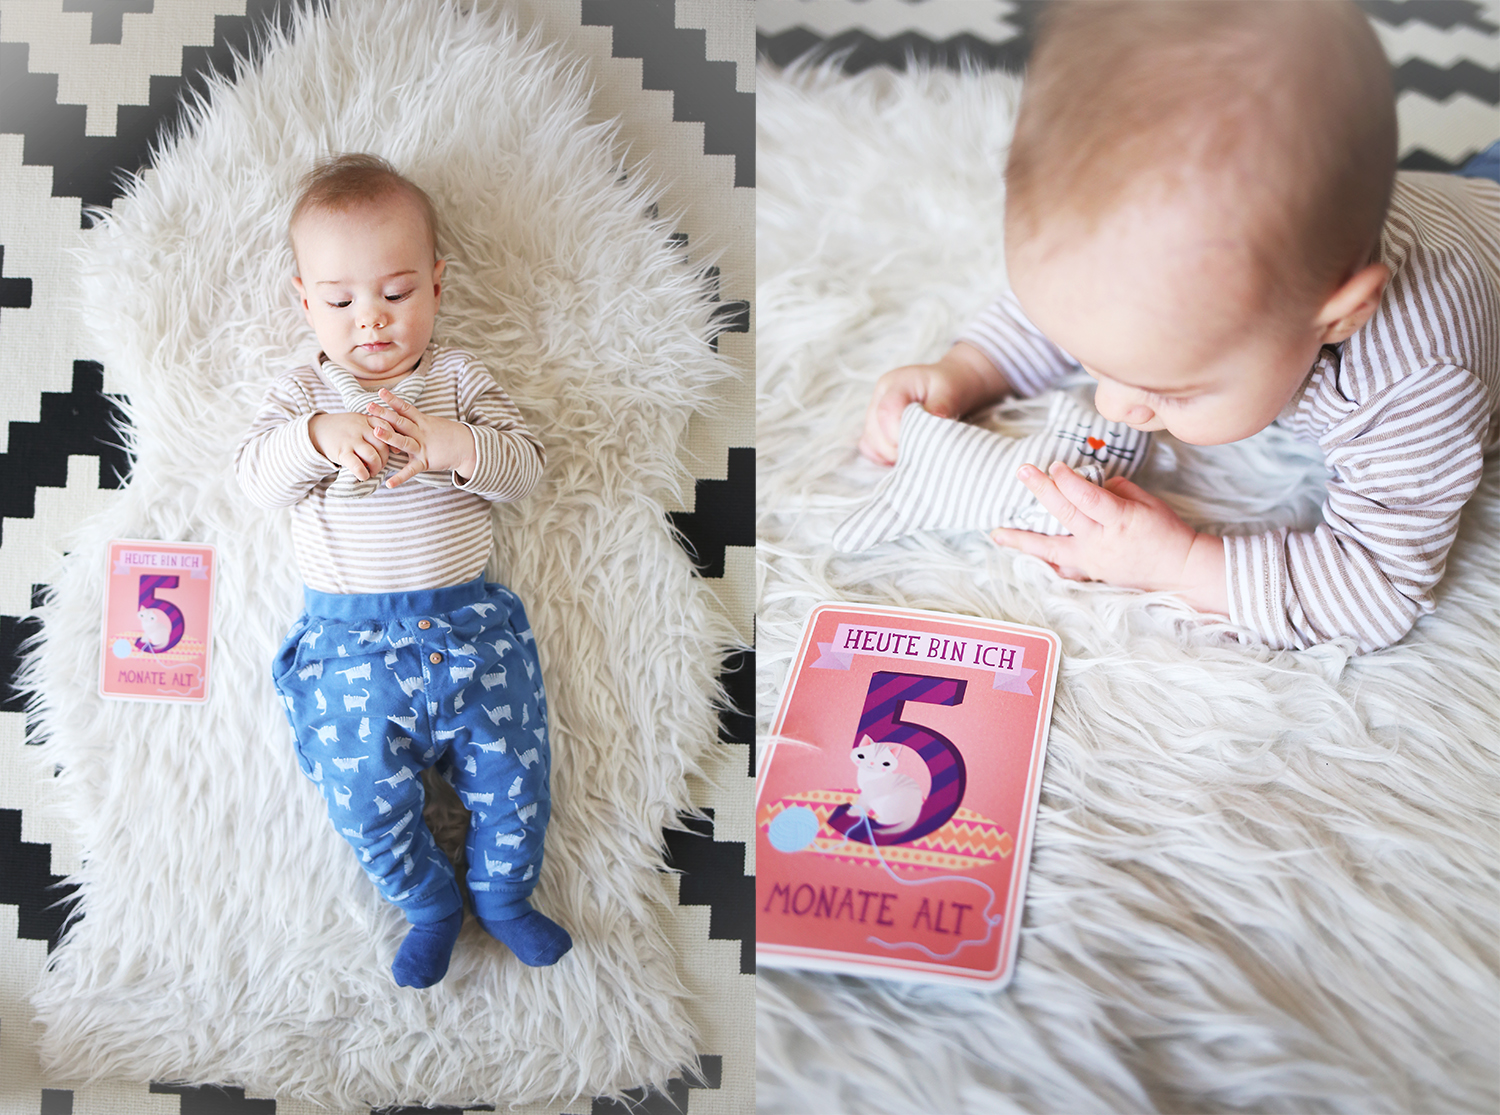 Baby-Update-5-month-Monate-Babyglueck-Post-21-Wochen-Babyboy-Elternglueck-Milestone-Baby-Cards-Wunderhaftig